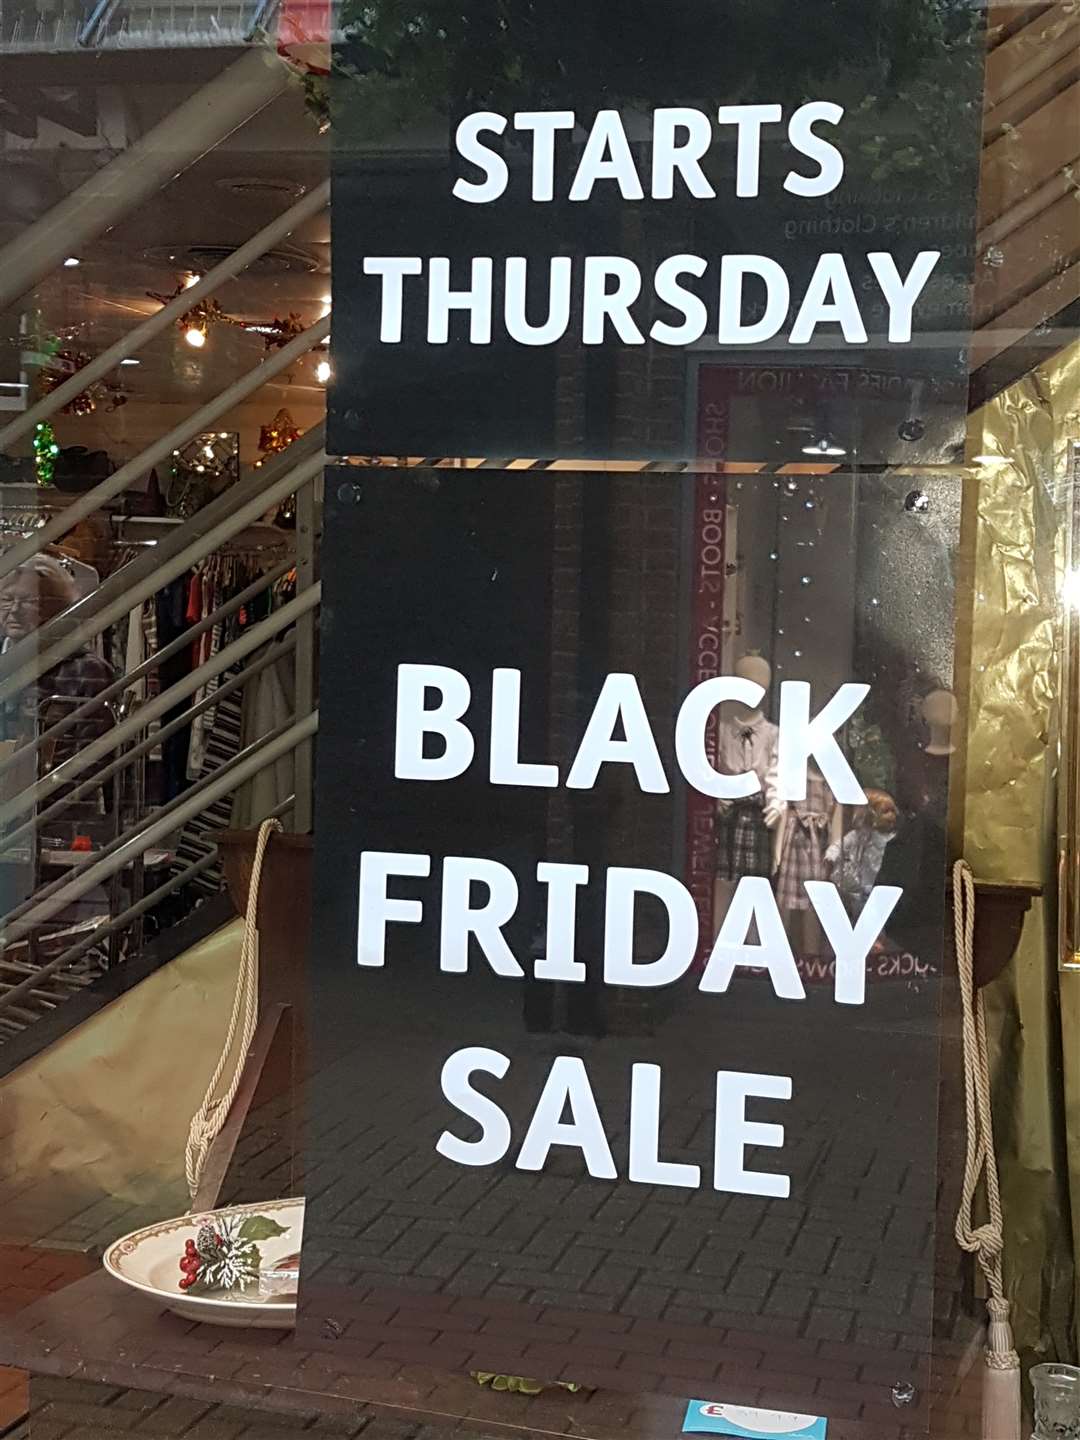 The YMCA shop's Black Friday sale starts on Thursday